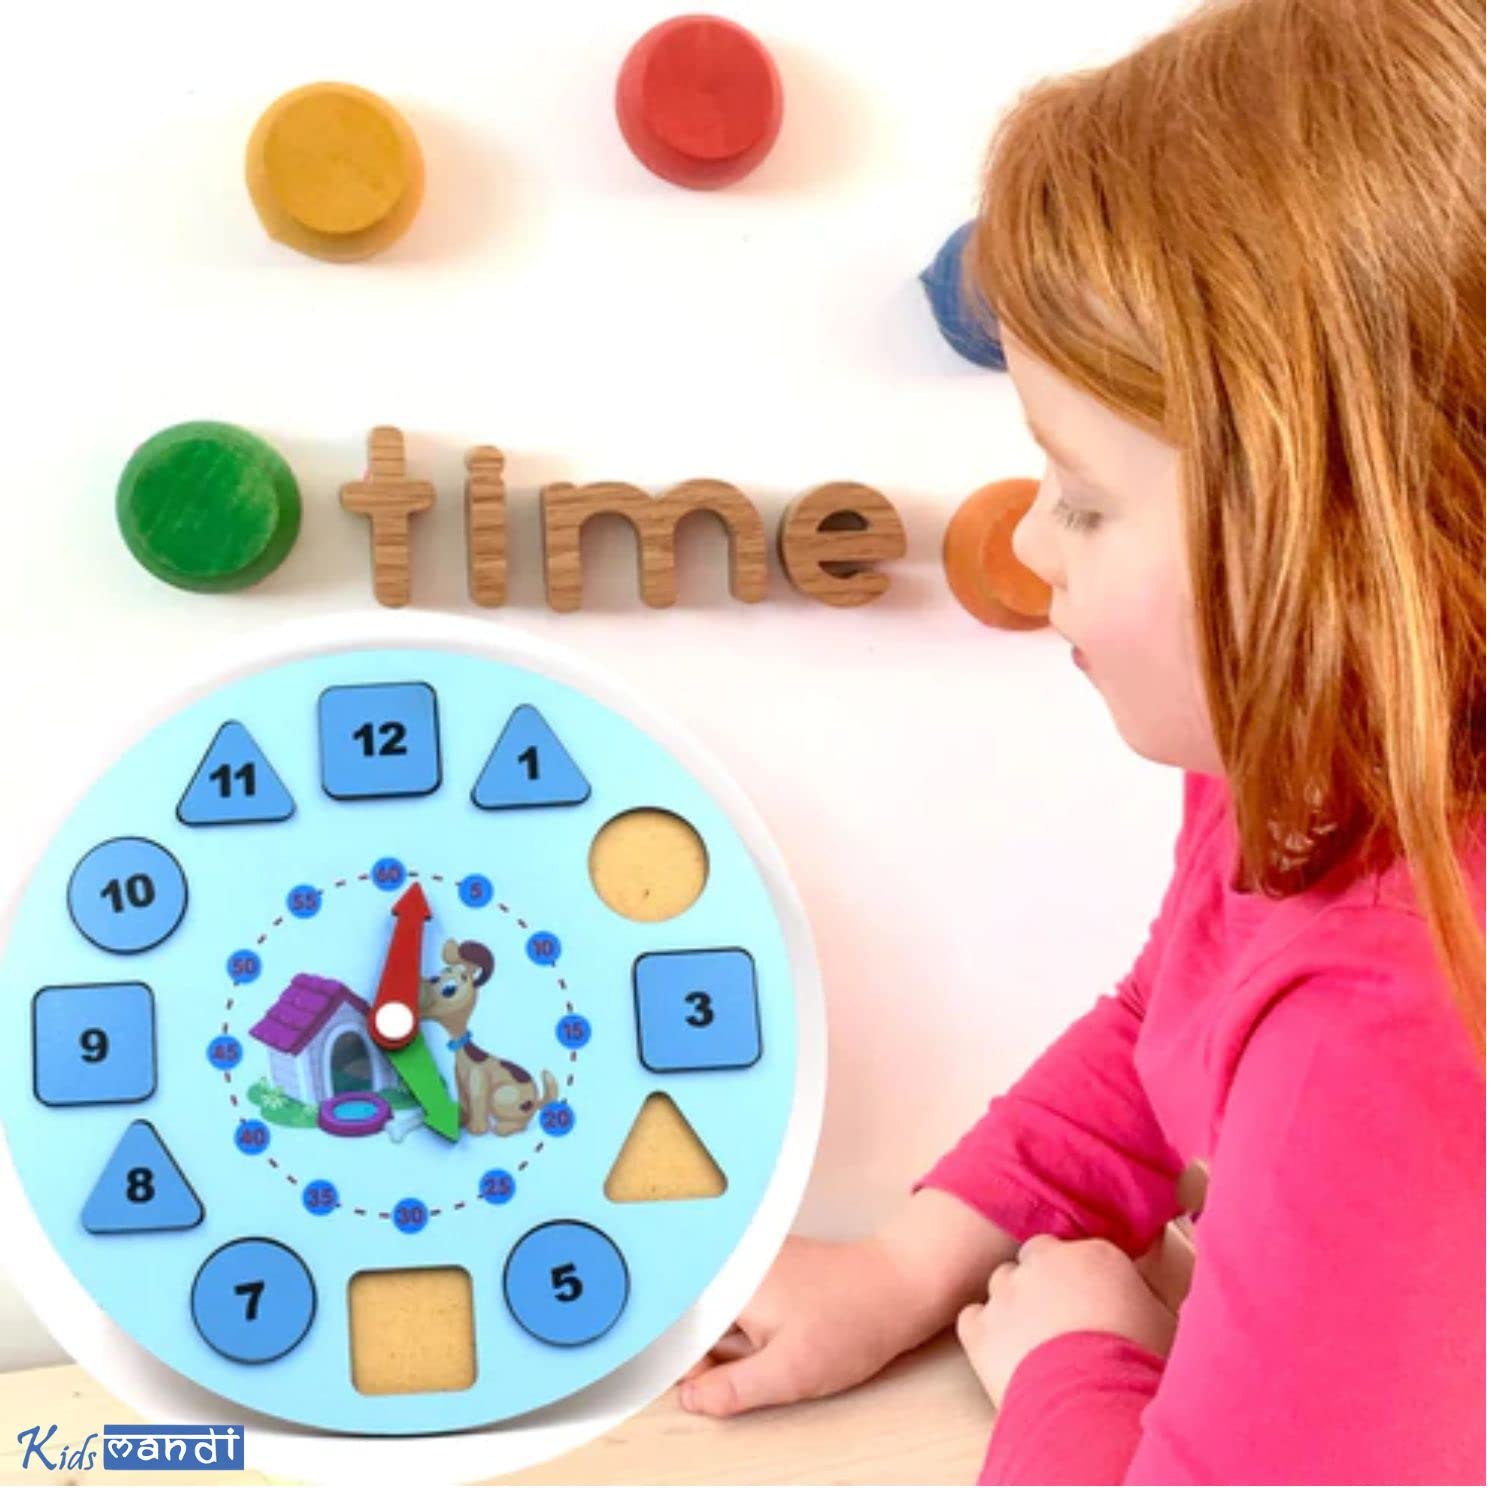 Kids Mandi wooden shape color sorting clock educational toy.